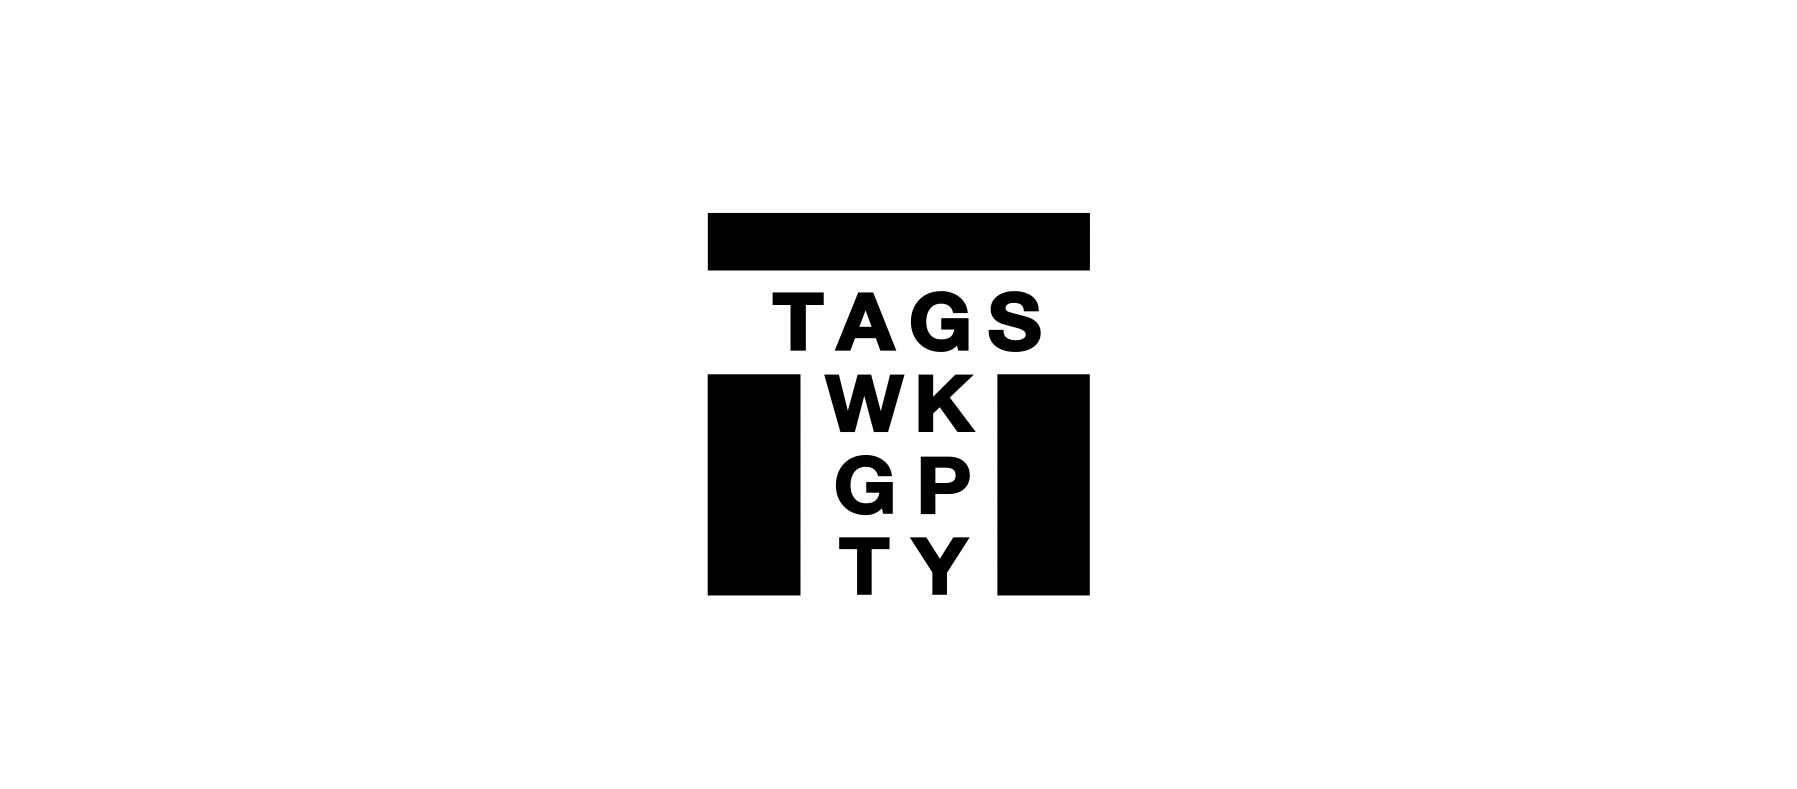 TAGS WKGPTY logo